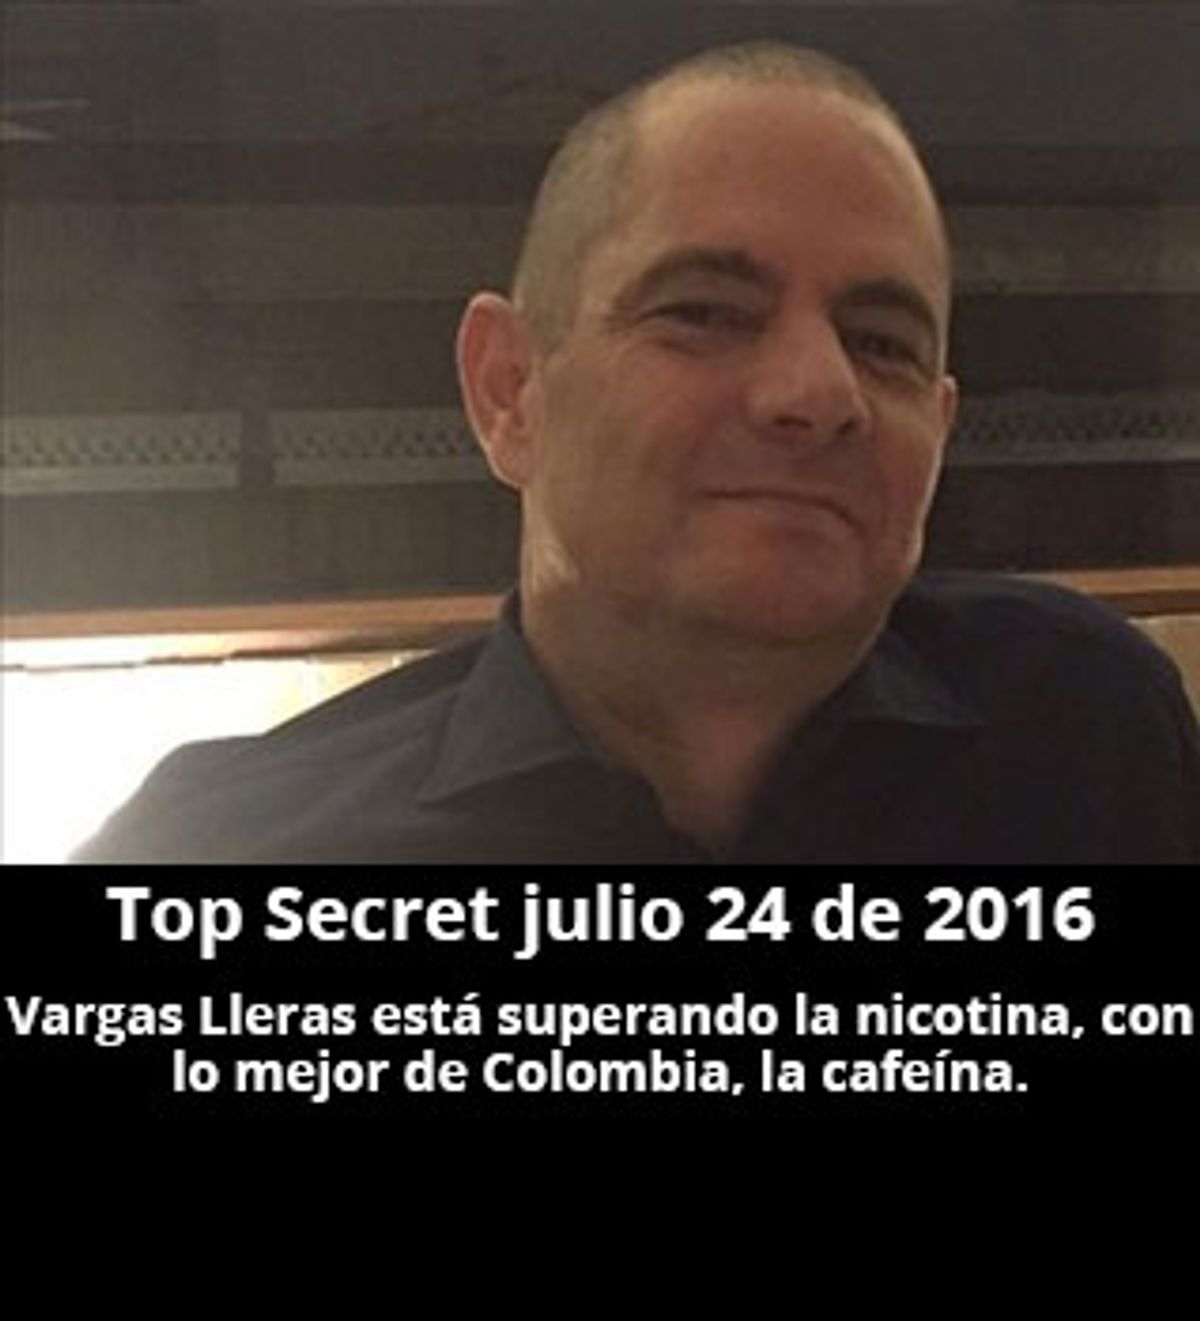 Top Secret julio 24 de 2016